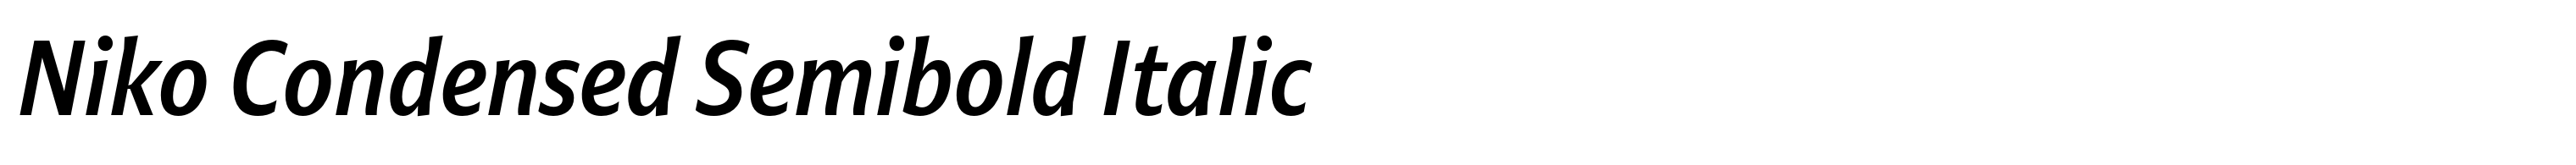 Niko Condensed Semibold Italic